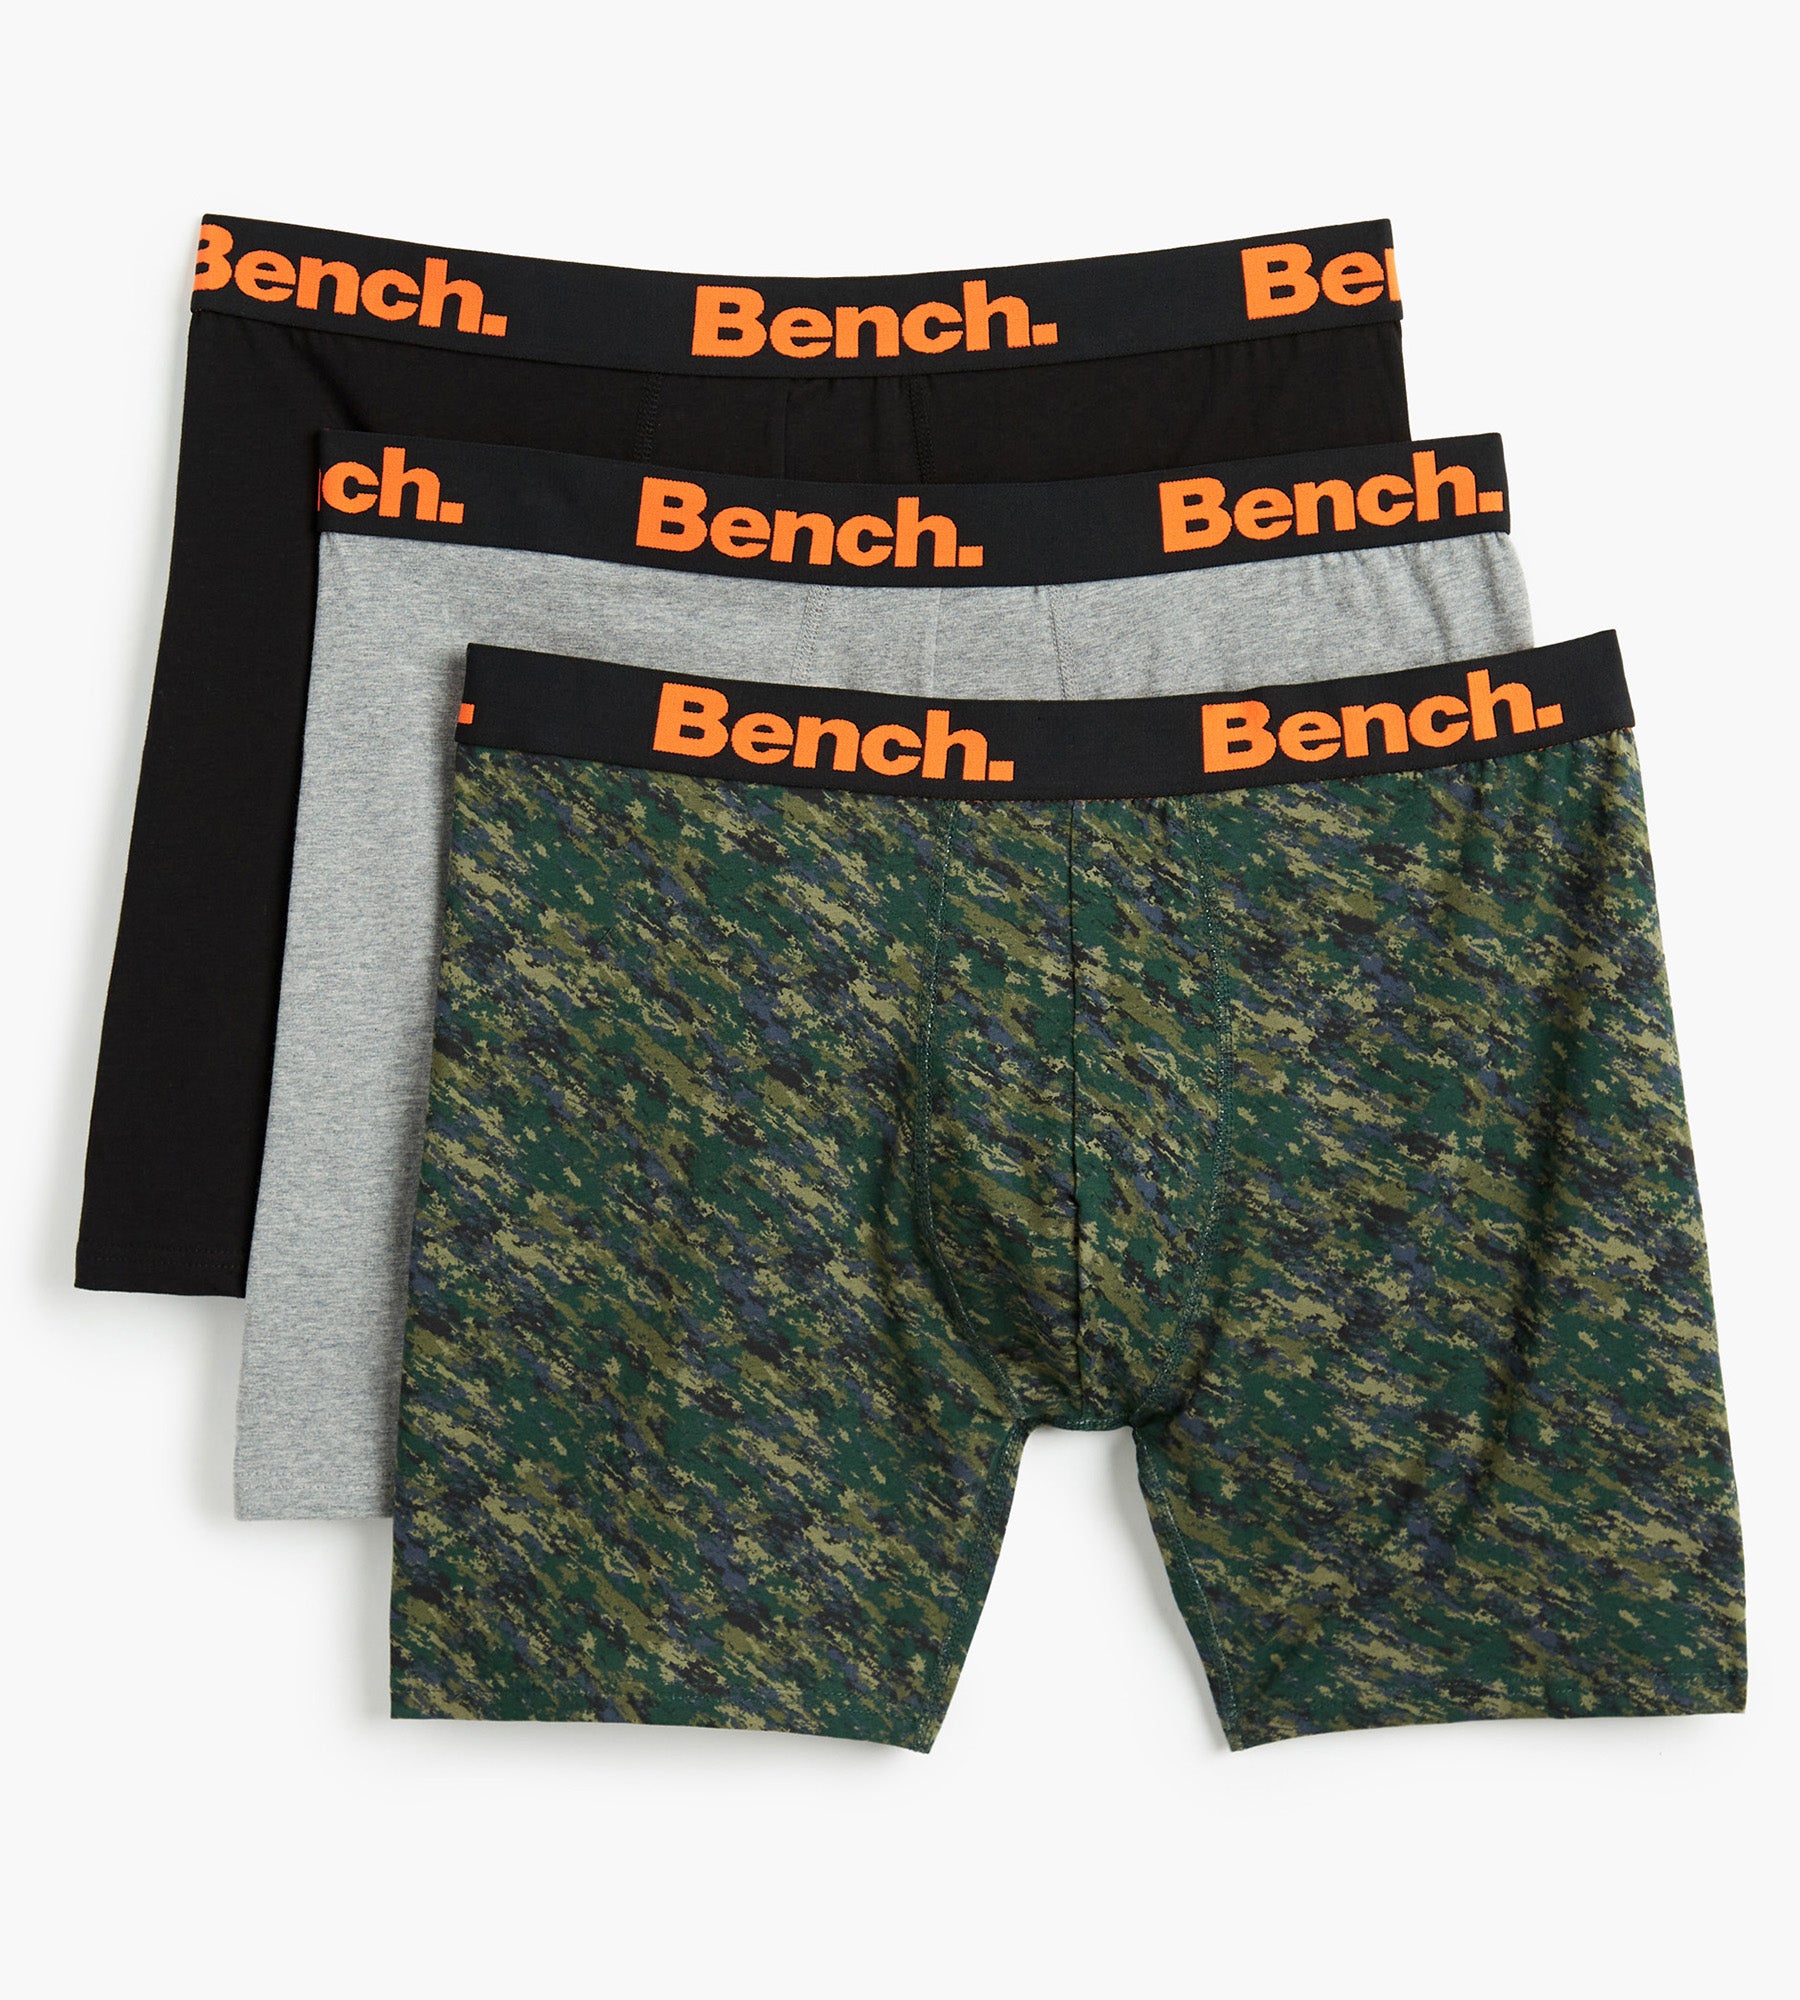 Mens Boxer Shorts (3 Pack) Underwear Stretch Trunks Bench Cotton Brief